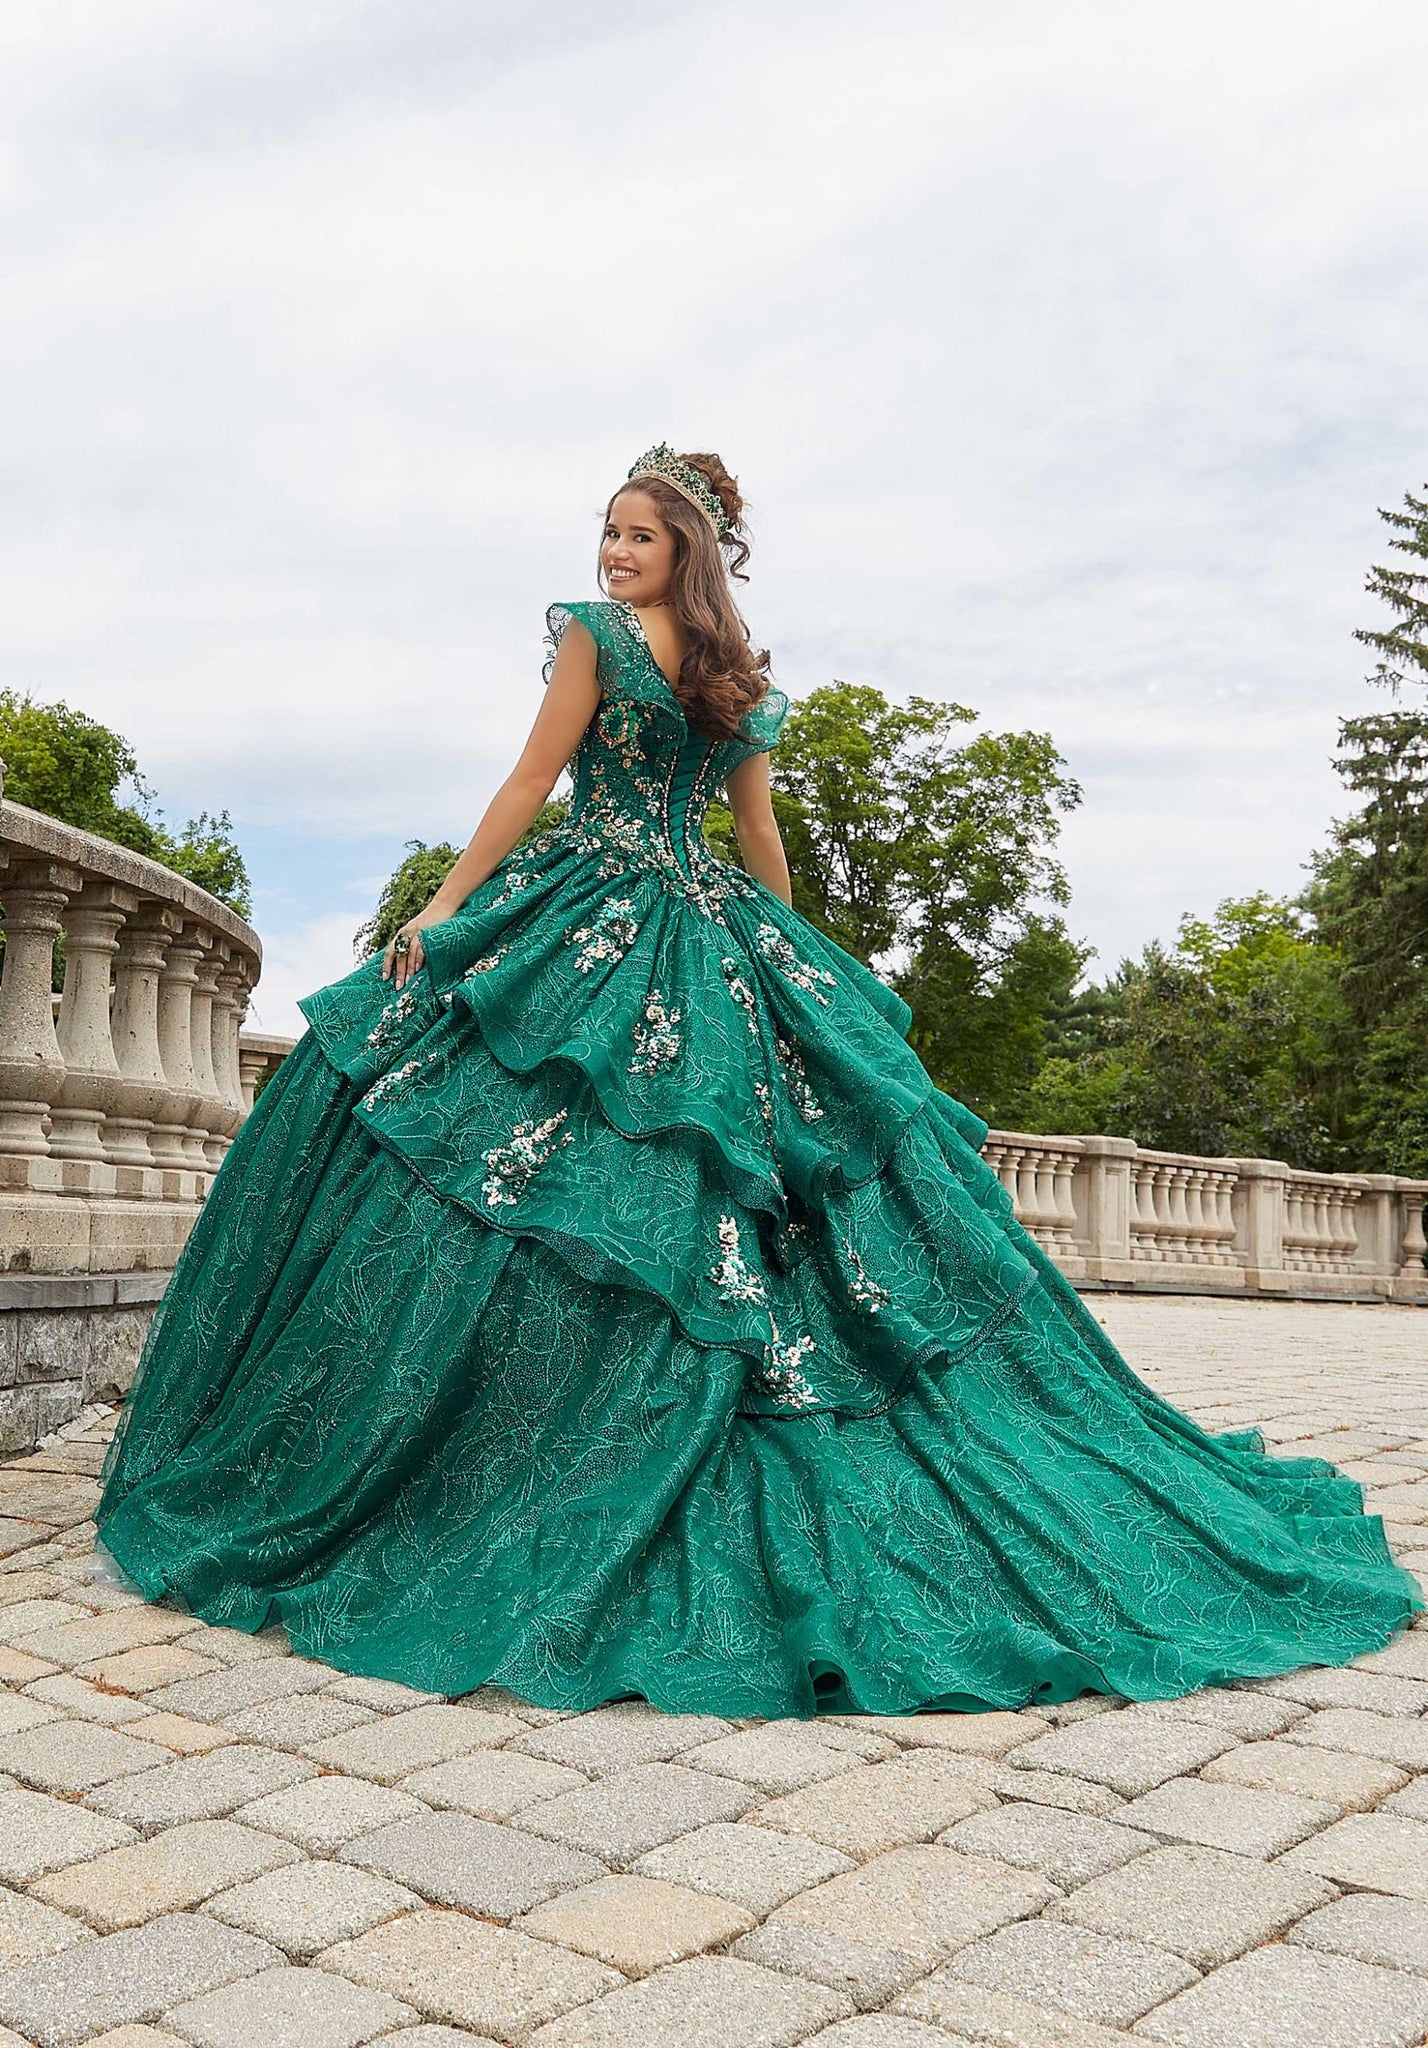 Contrasting Three-Dimensional Appliquéd Quinceañera Dress